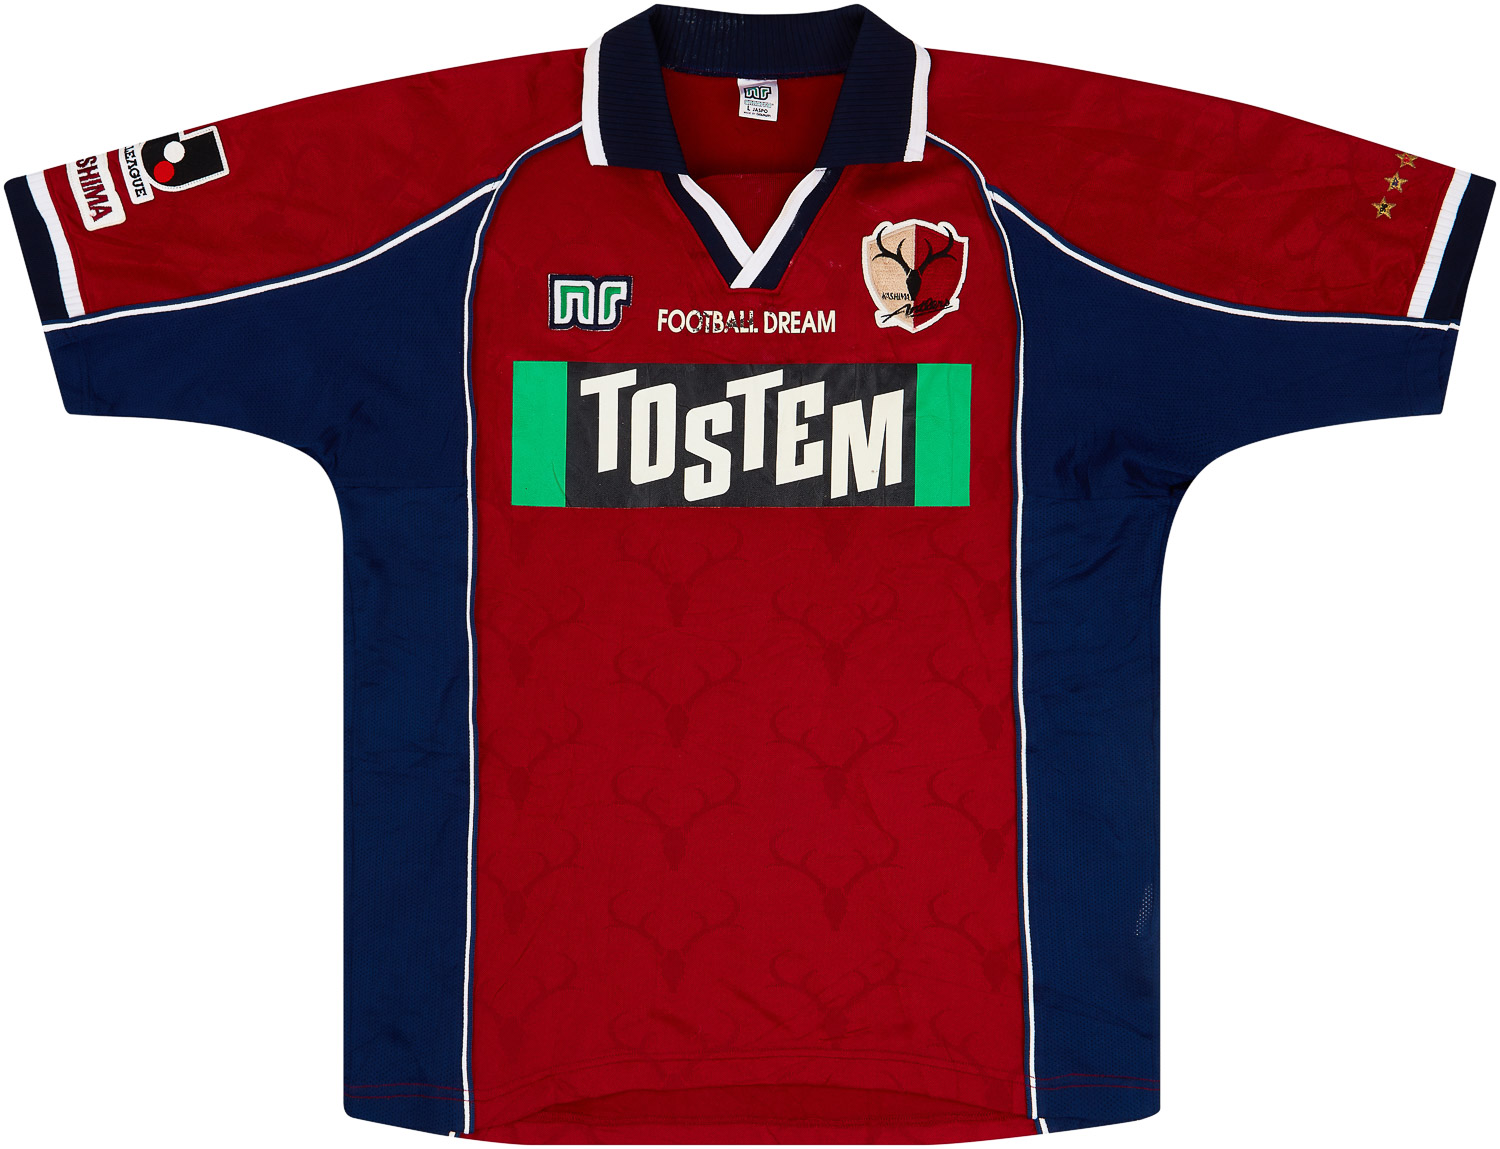 2001 Kashima Antlers Signed Home Shirt - 6/10 - ()